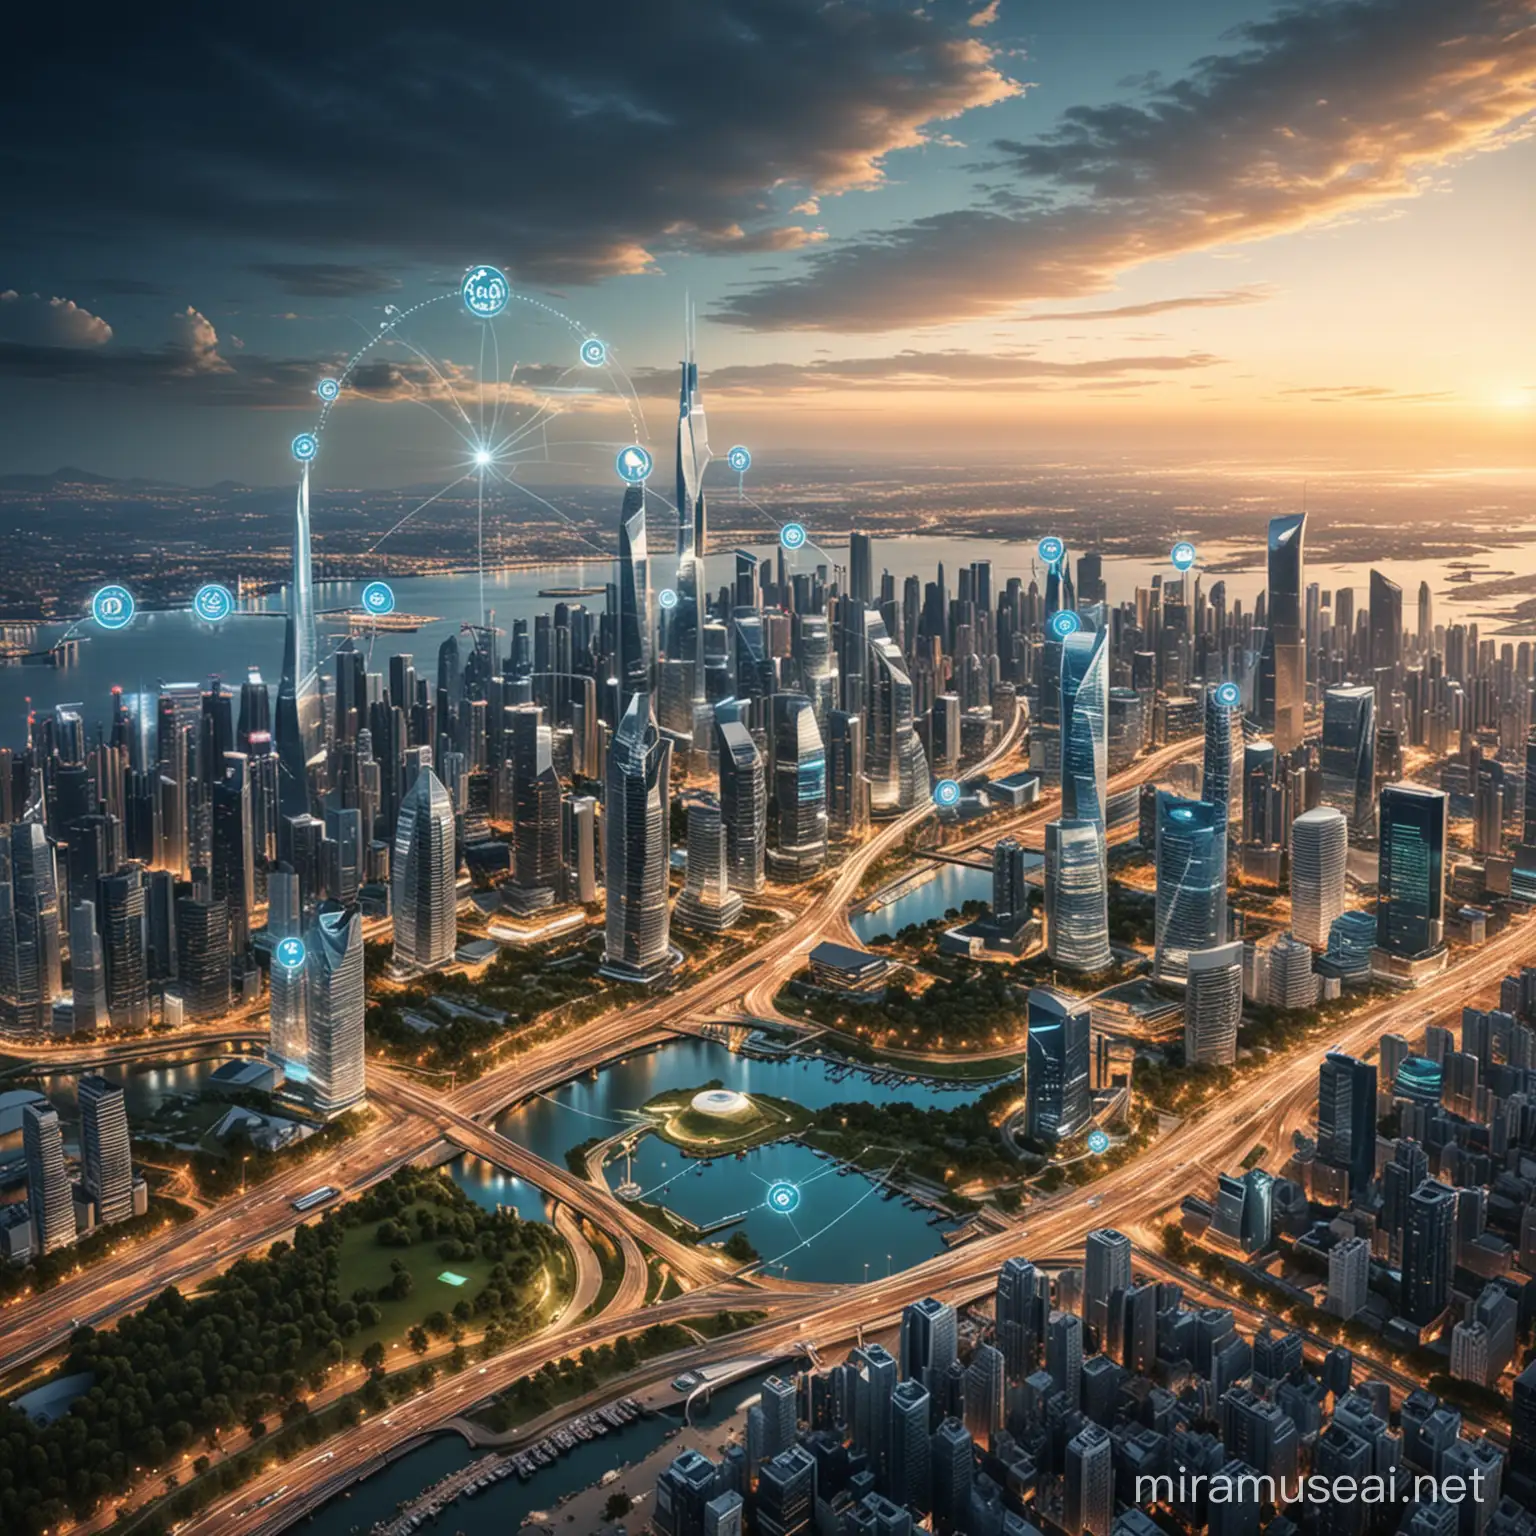 Futuristic Urban Landscape Embracing Technology in a Smart City